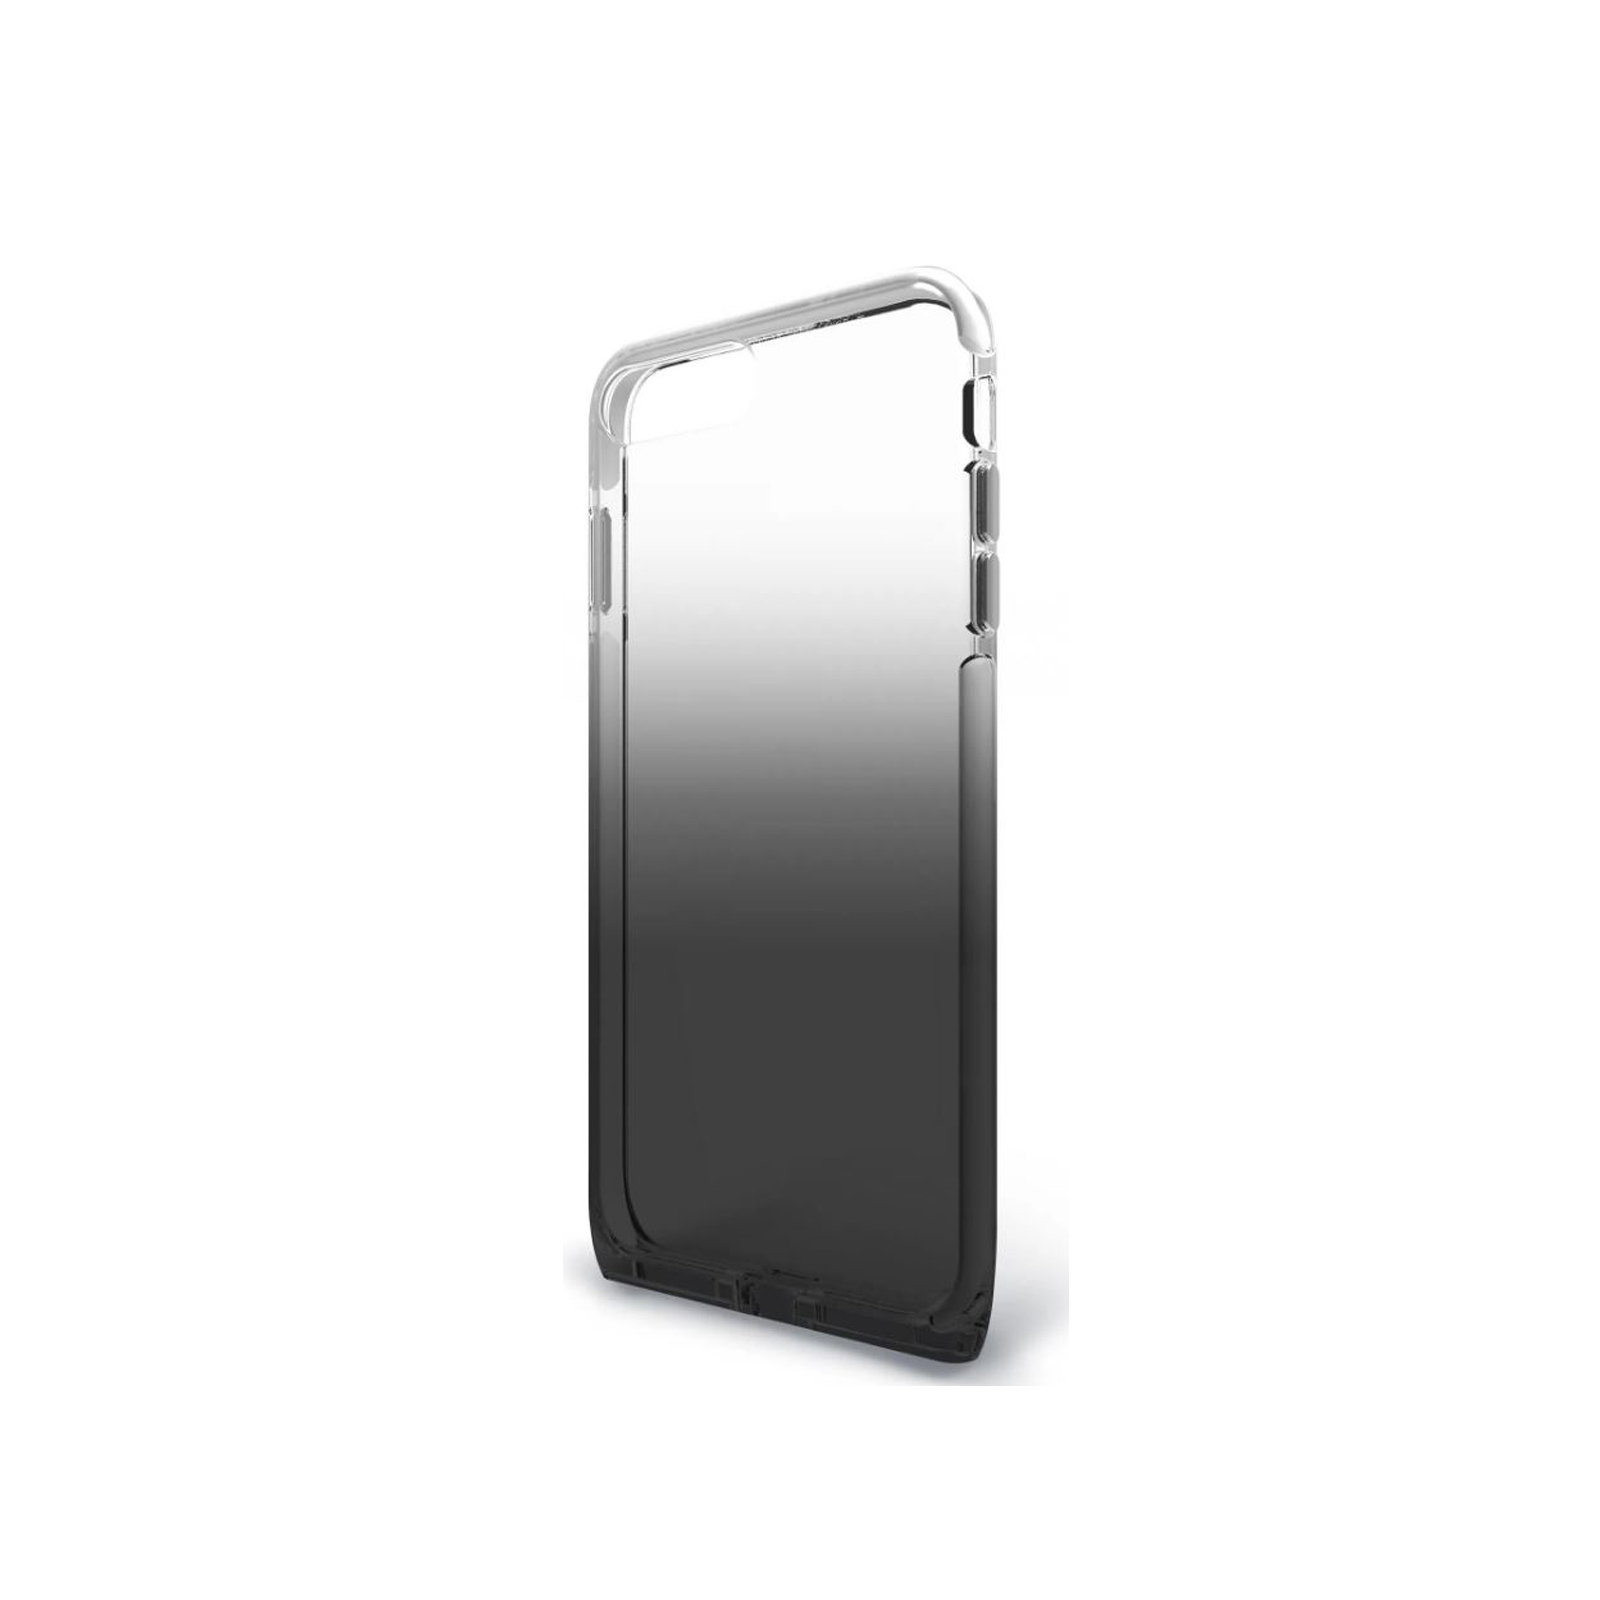 Harmony iPhone 6 Plus / 7 Plus / 8 Plus Case [Clear / Smoke]